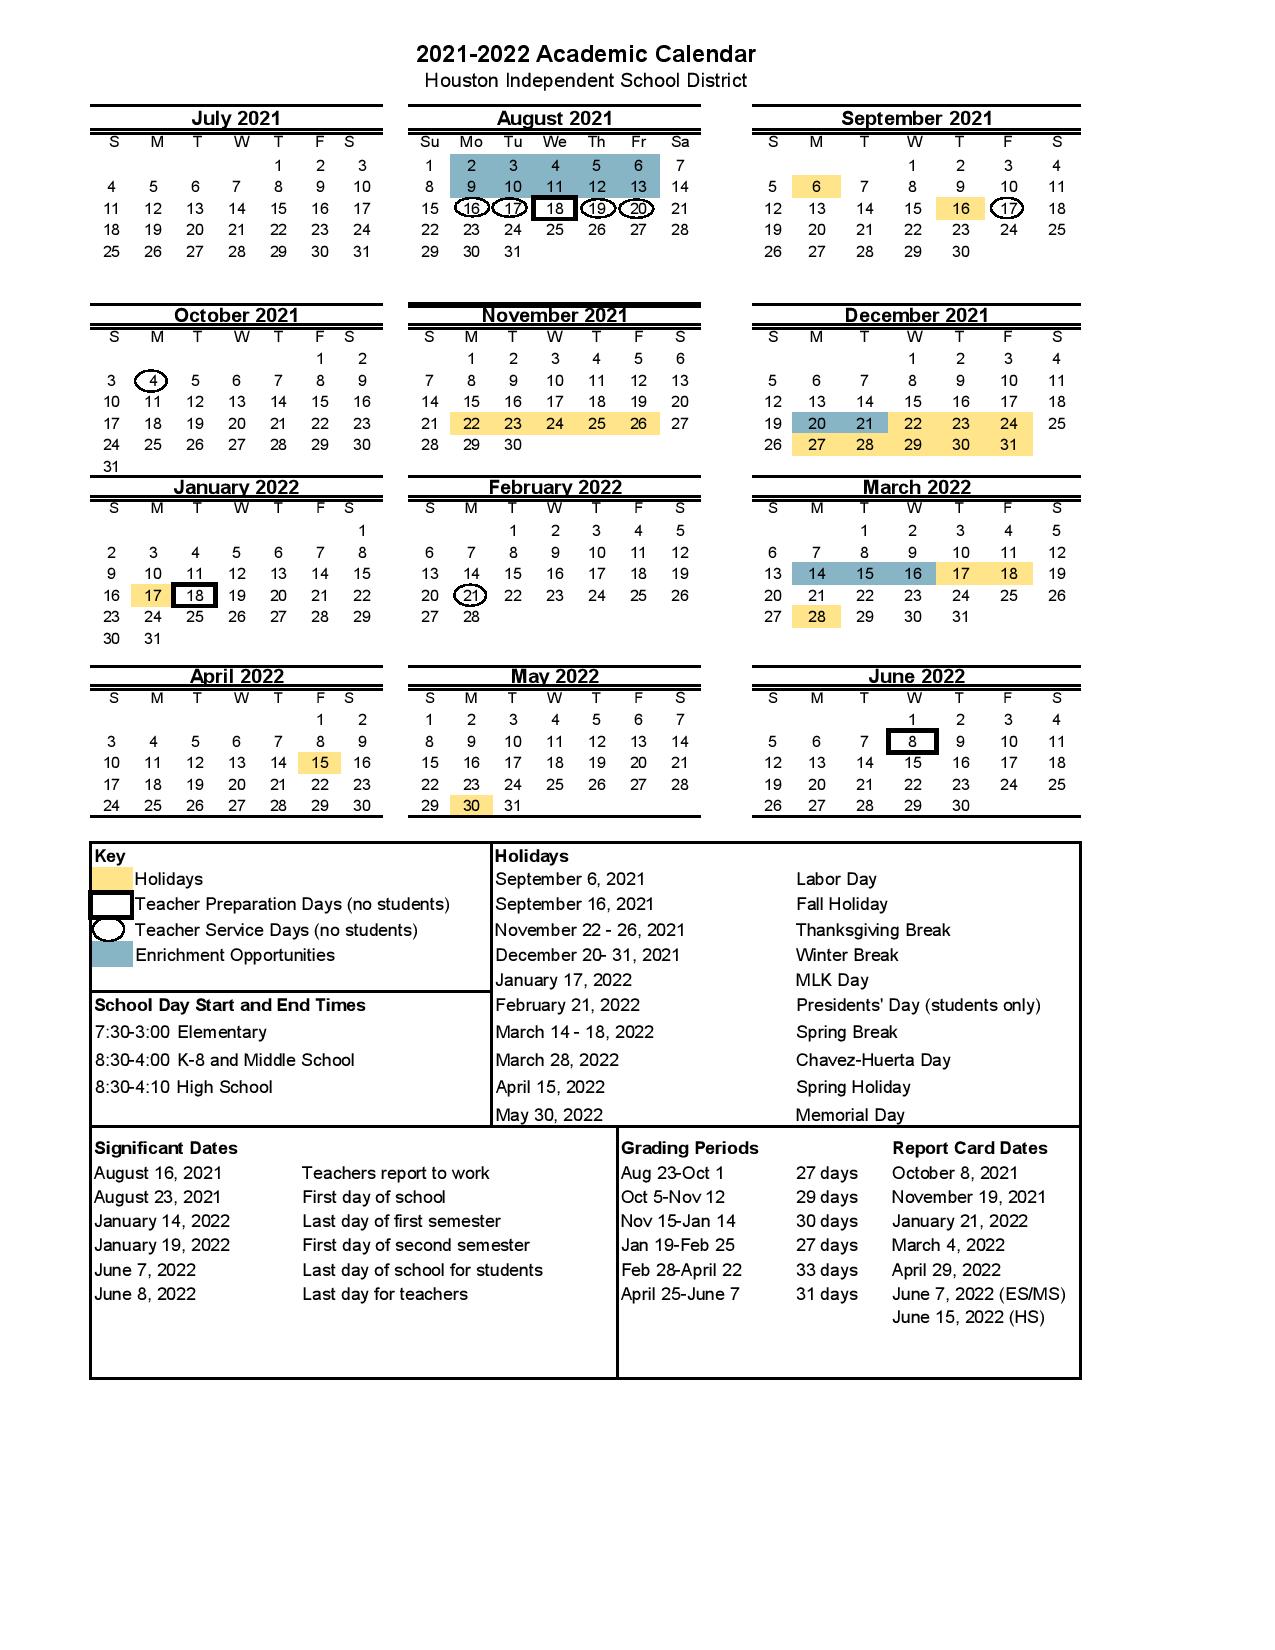 Hisd Calendar 2022 2023 Houston Independent School District Calendar 2021-2022